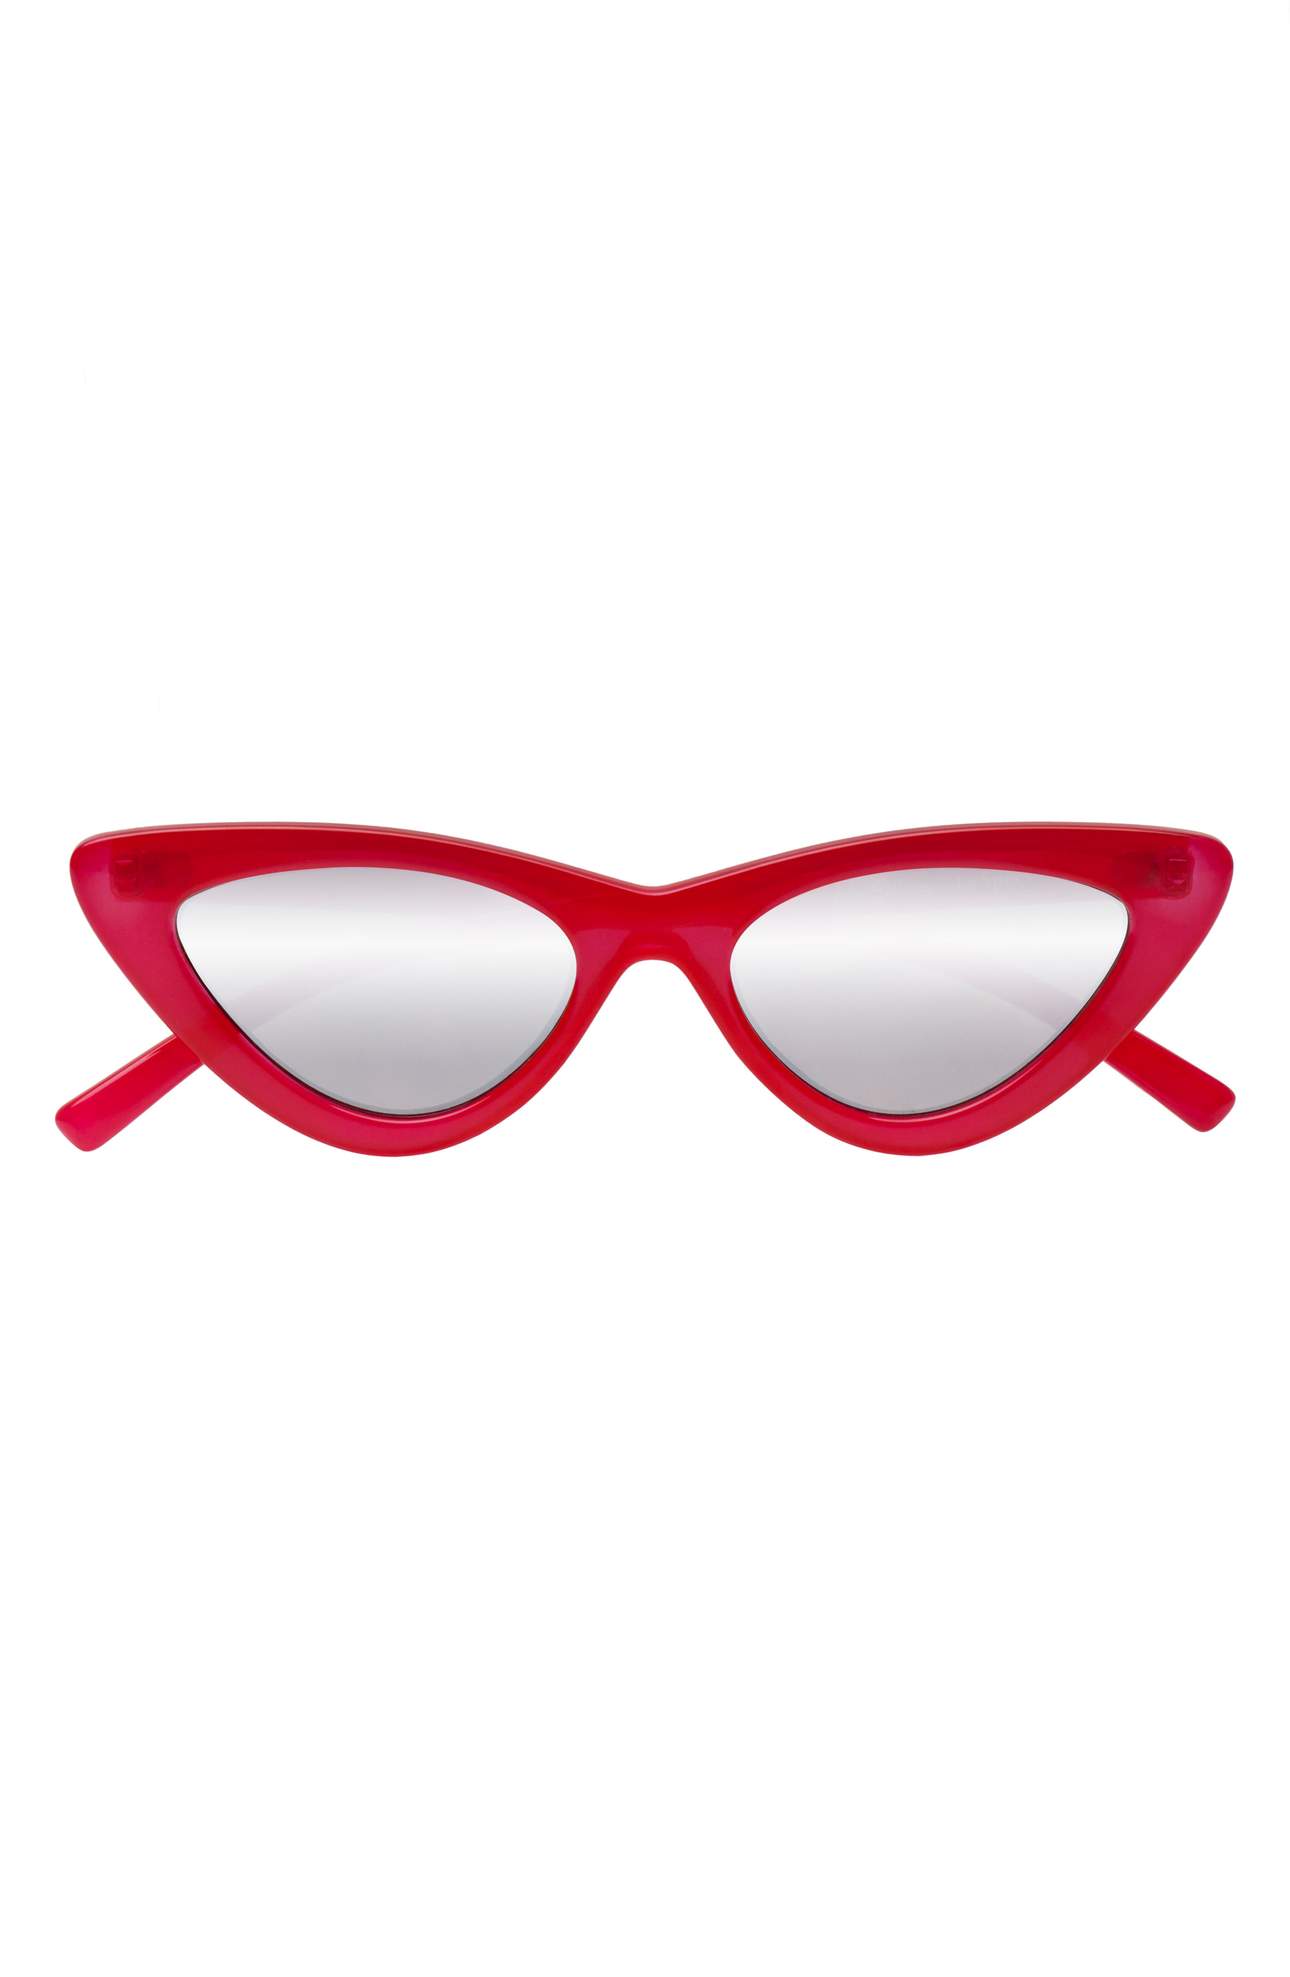 Adam Selman Red Cat Eye Sunglasses.jpg